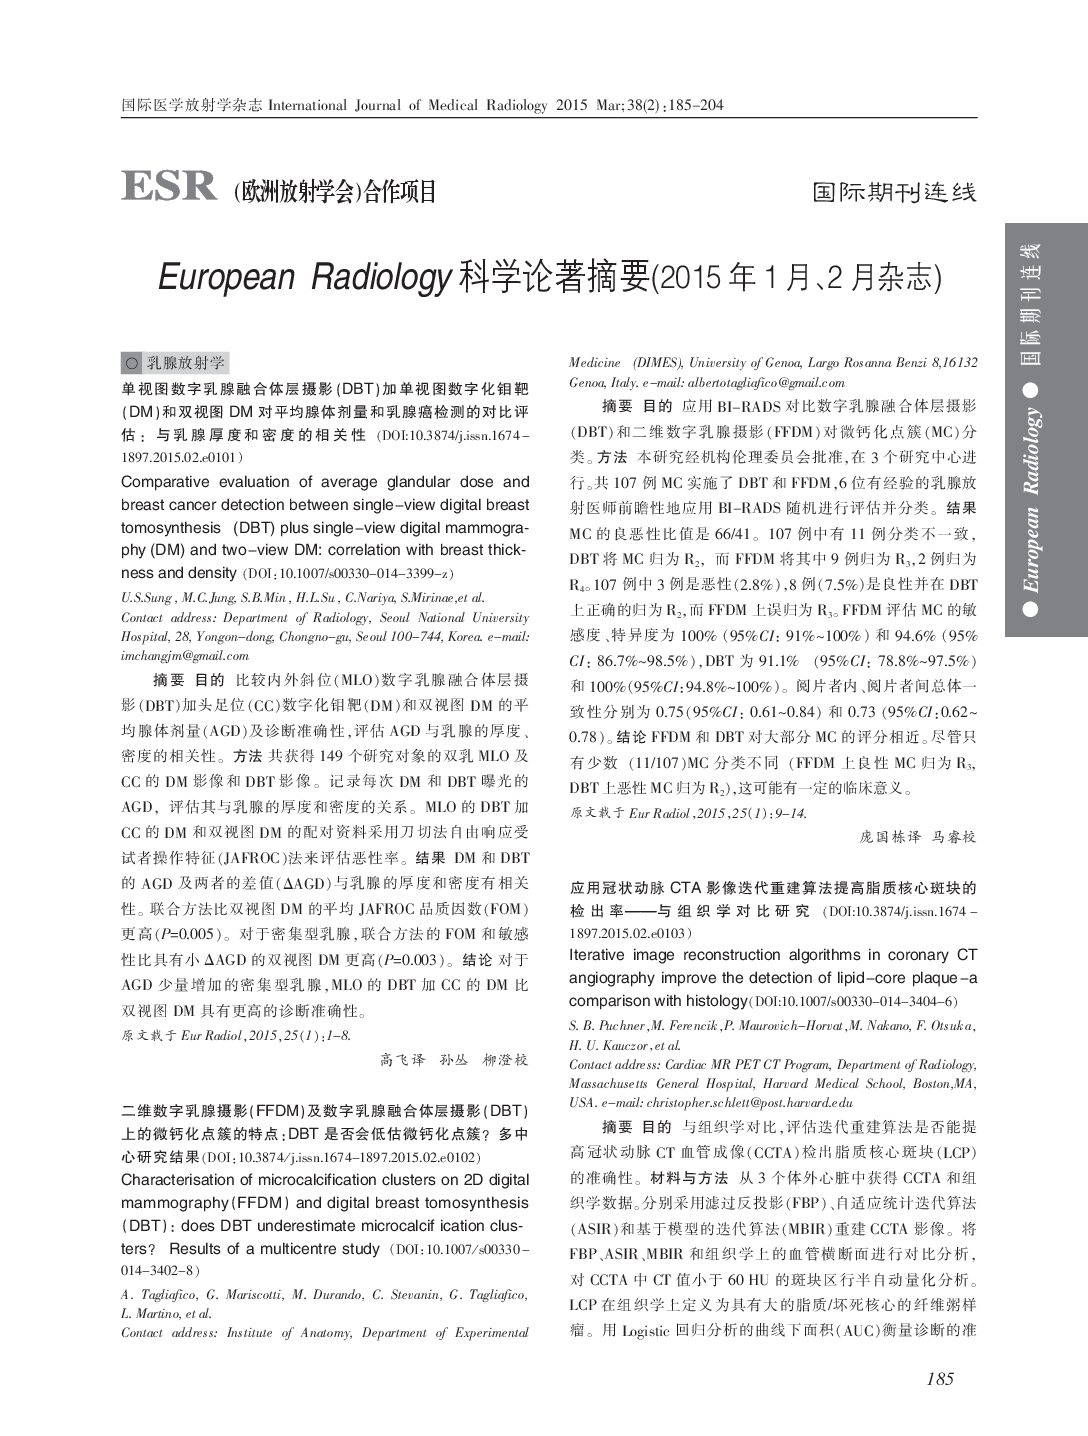 European Radiology Vol. 2015, January-February (1,6 MB)